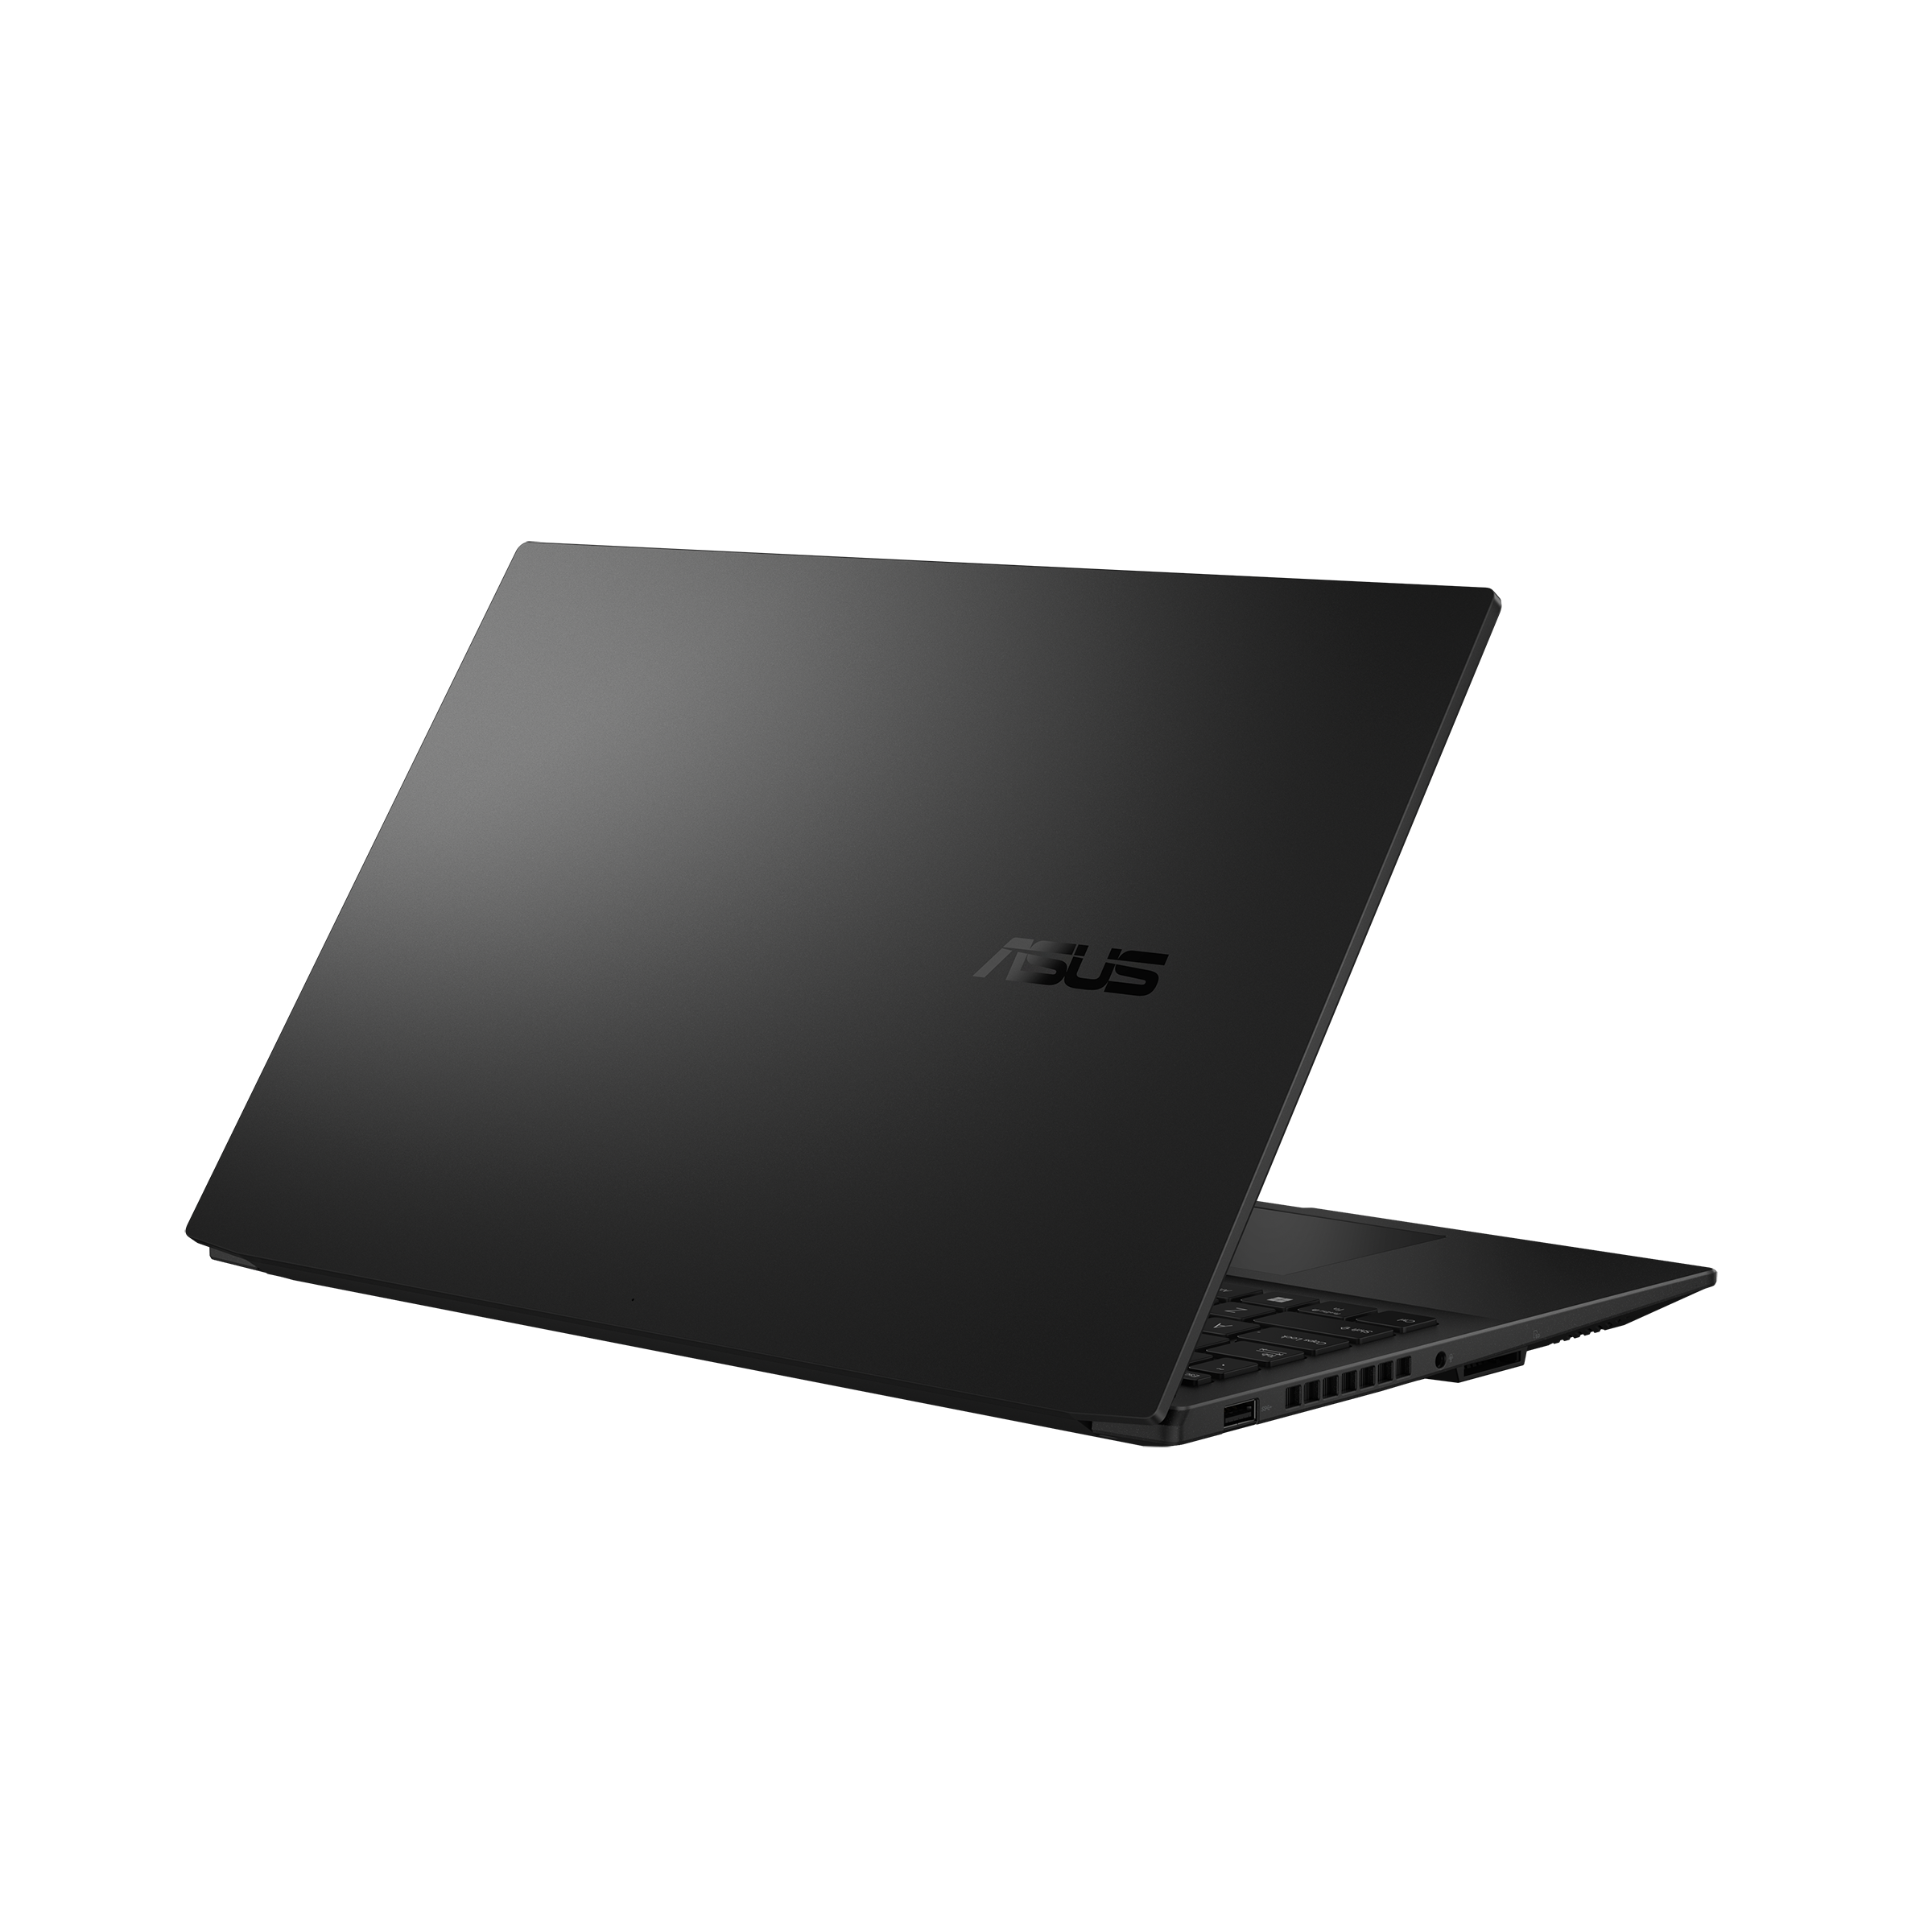 ASUS Creator Laptop Q (Q530)｜Laptops For Home｜ASUS Global